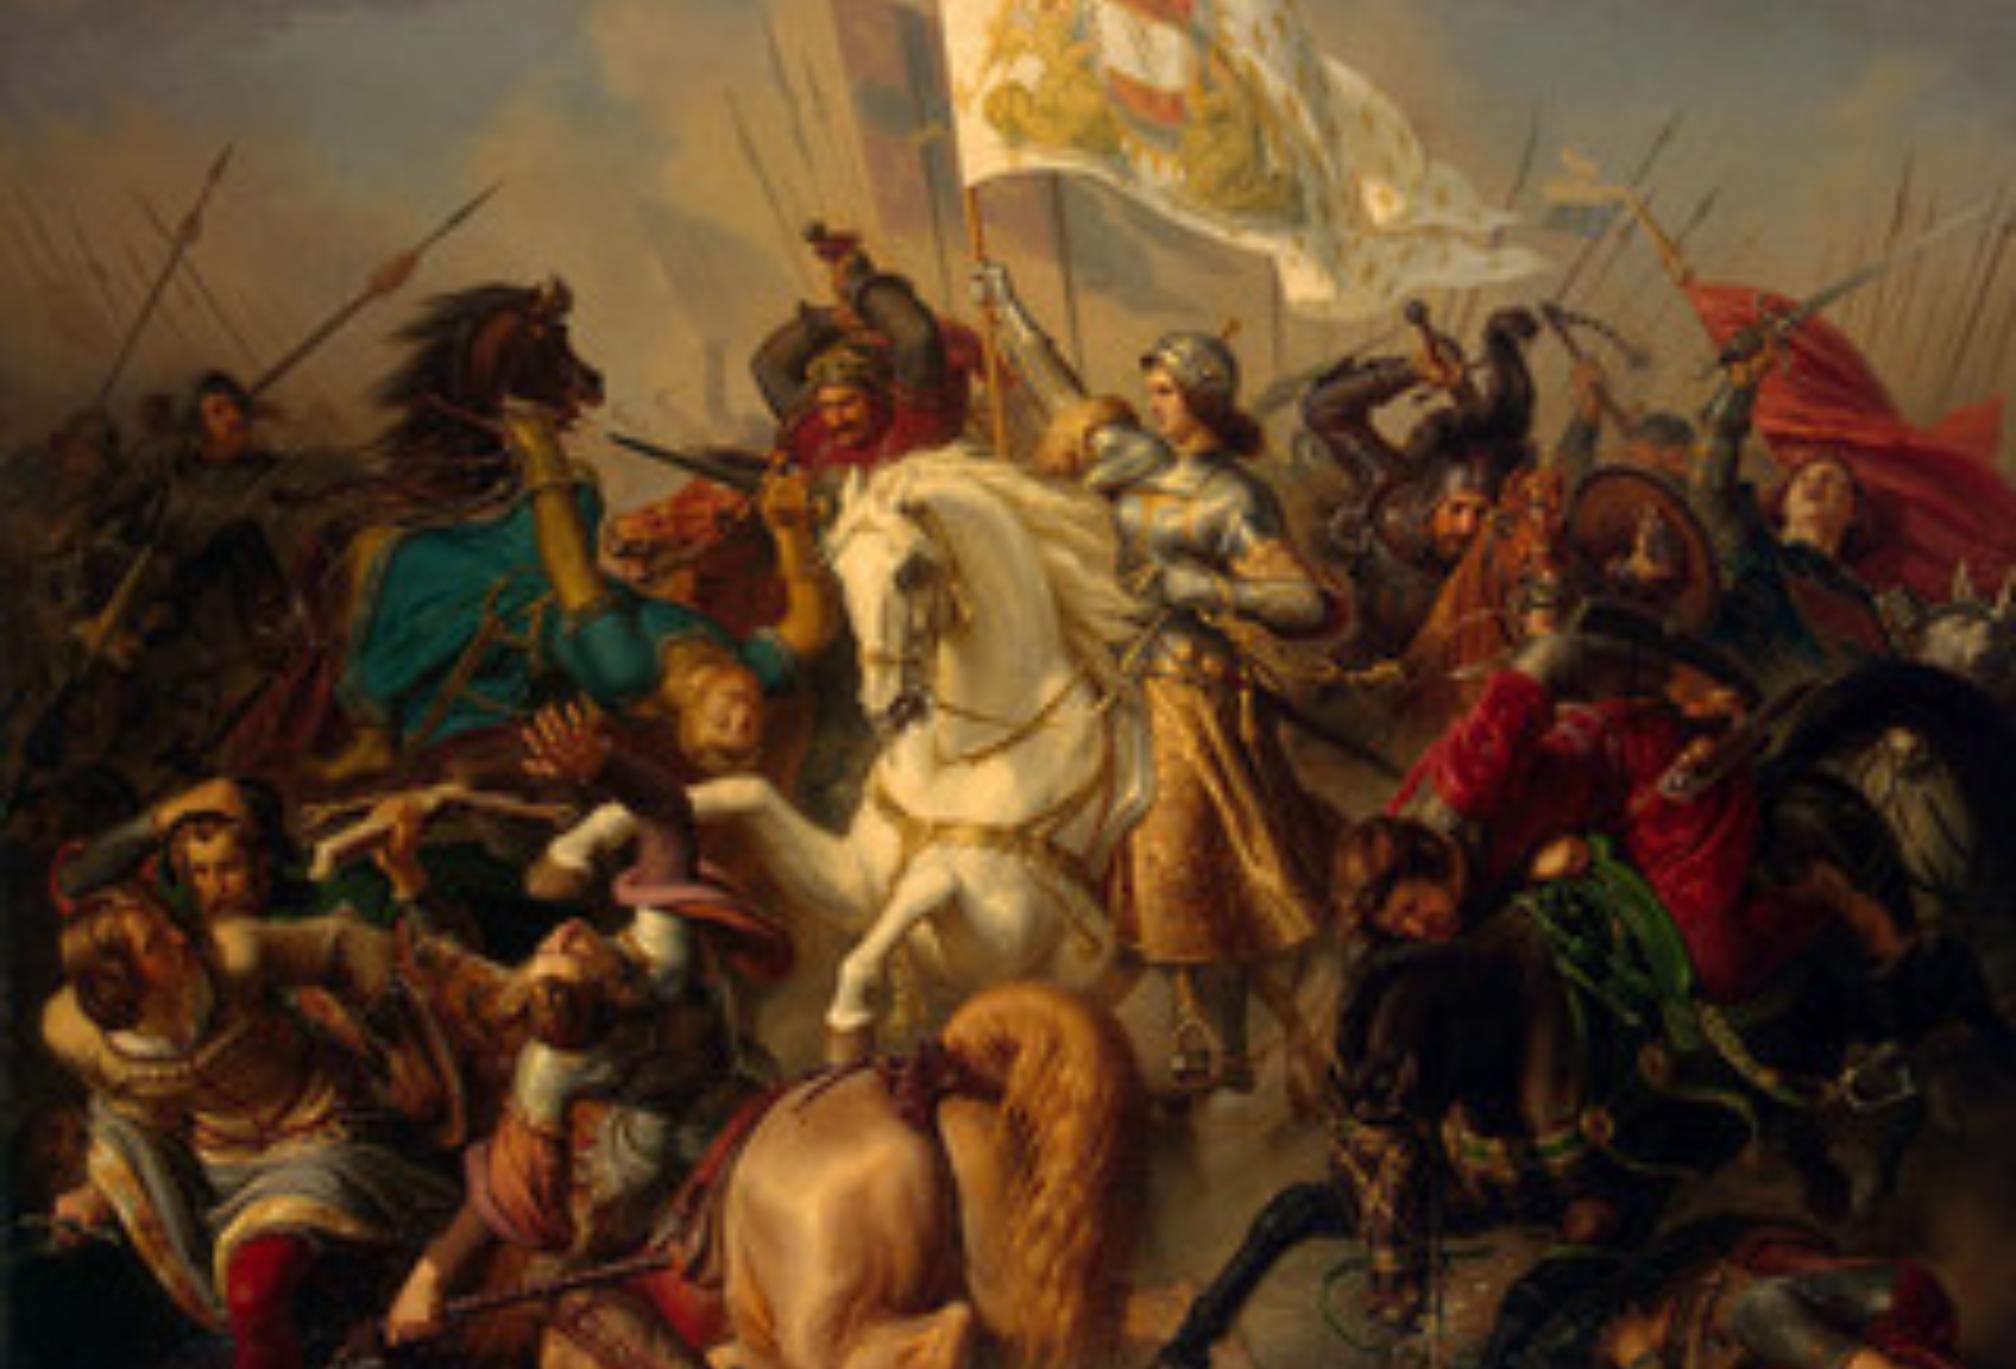 Jeanne D’ Arc: Αιρετική μάγισσα και πολεμίστρια – Η πραγματική ιστορία της Ιωάννα της Λωραίνης που η Καθολική Εκκλησία την έκαψε ζωντανή ως μάγισσα και μετά την ανακήρυξε Αγία 